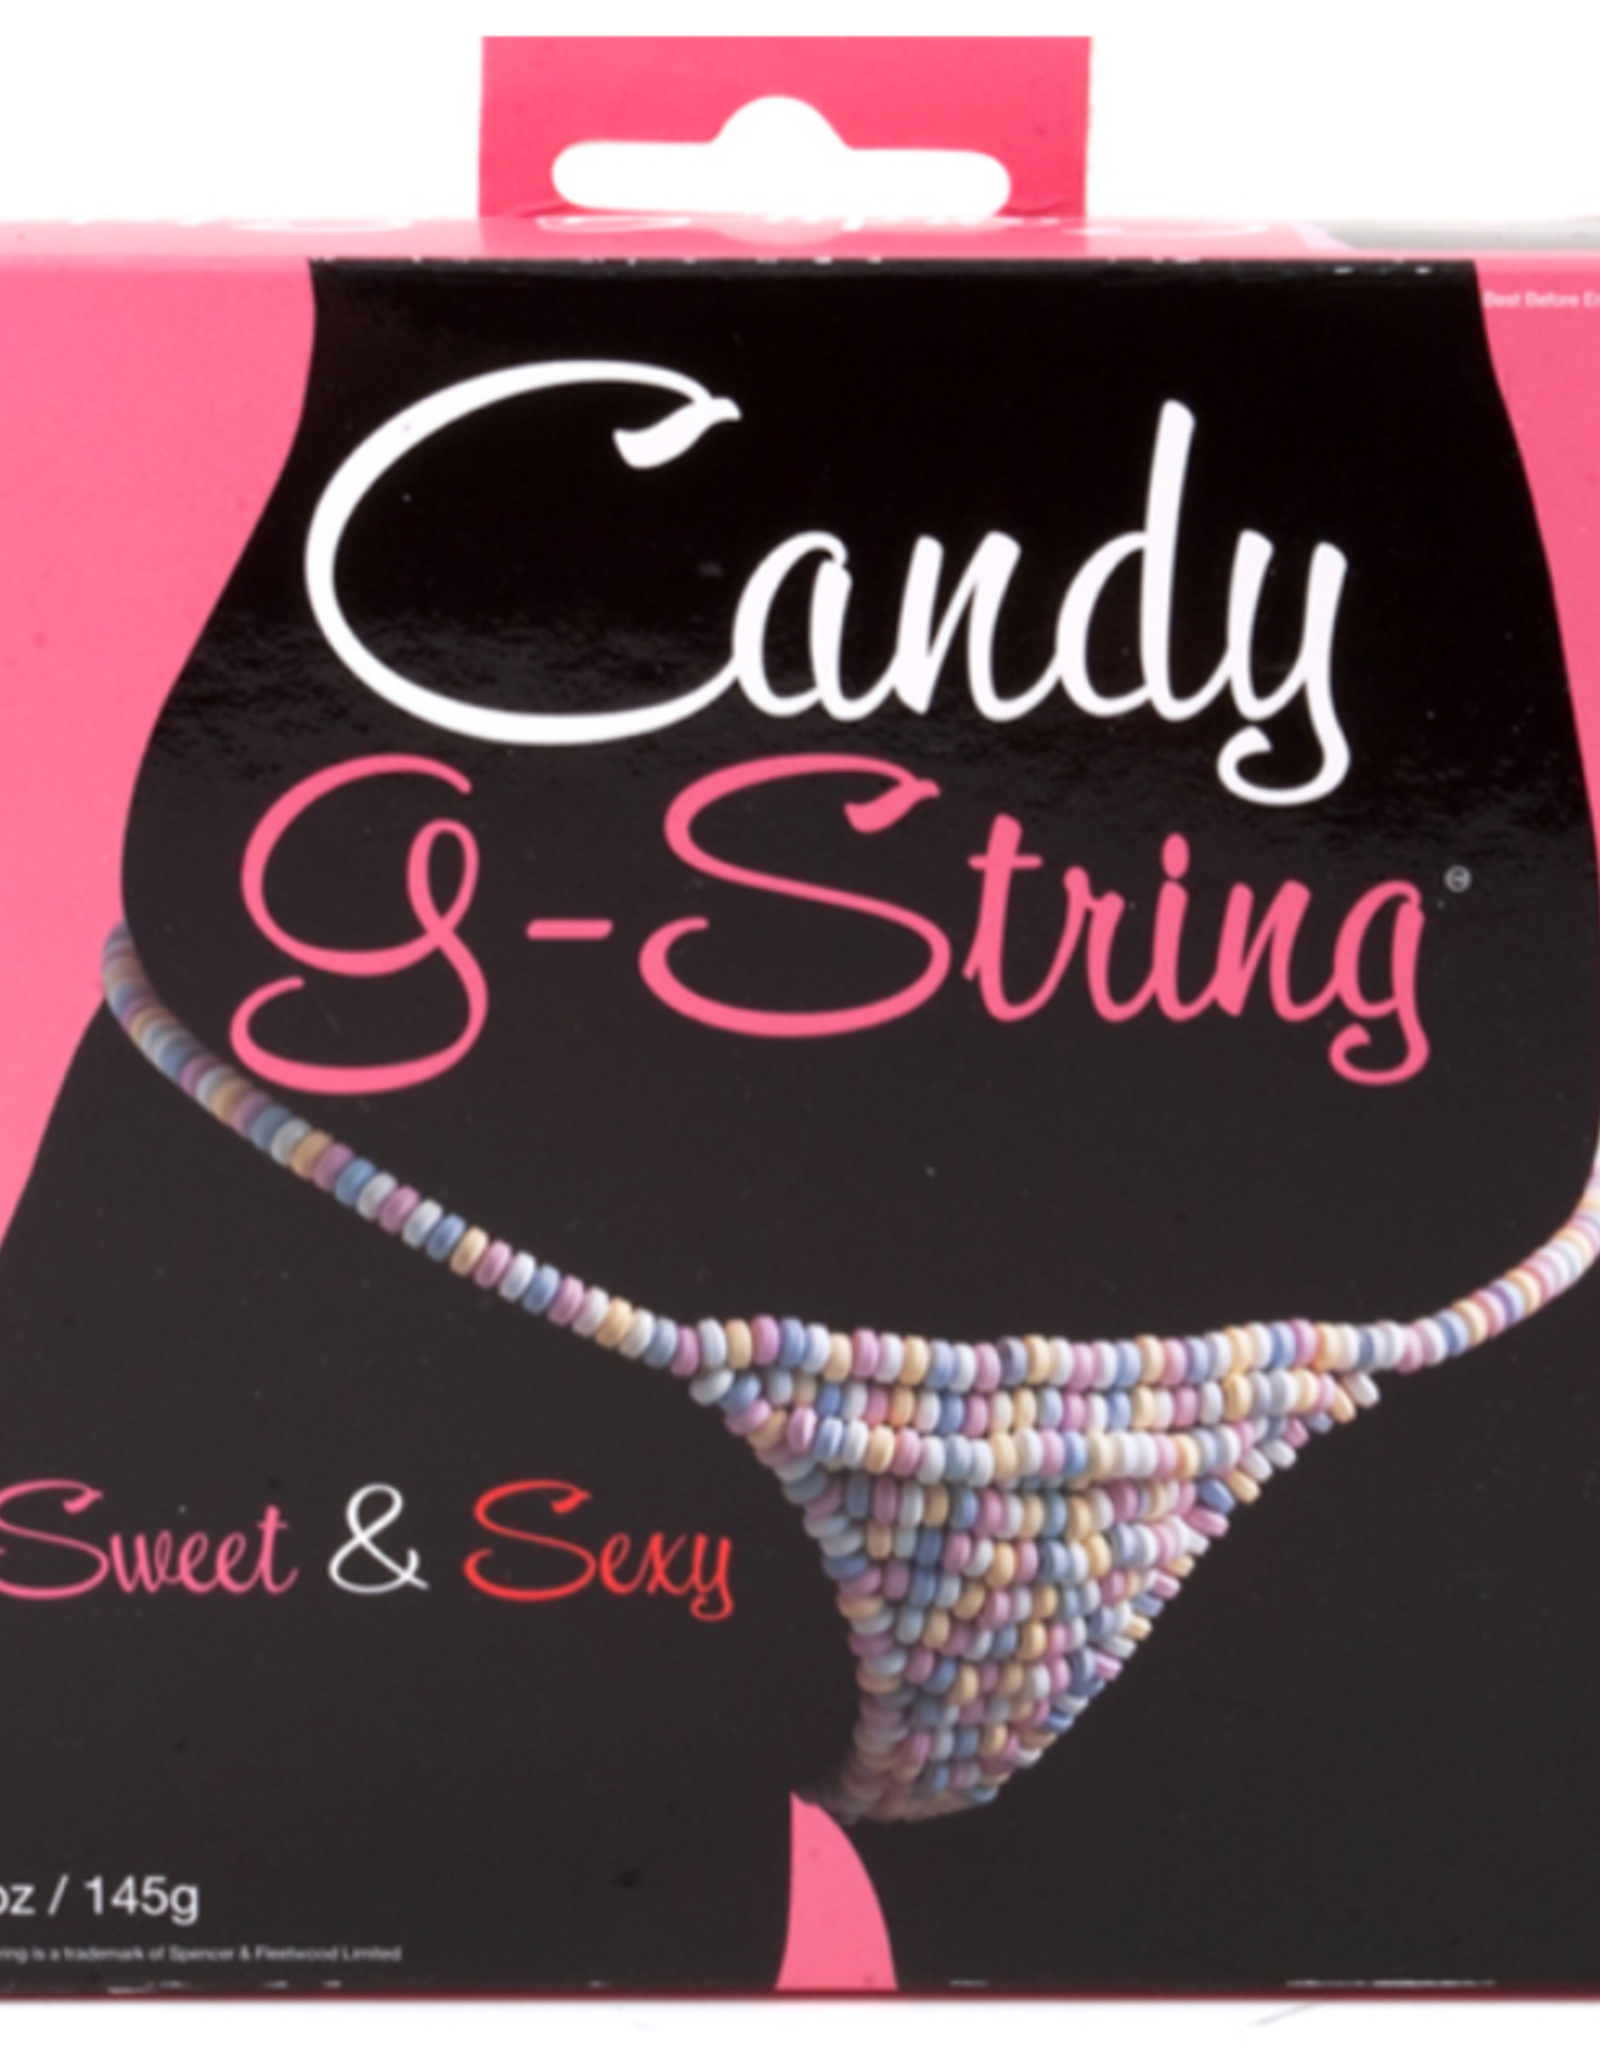 Edible candy G String